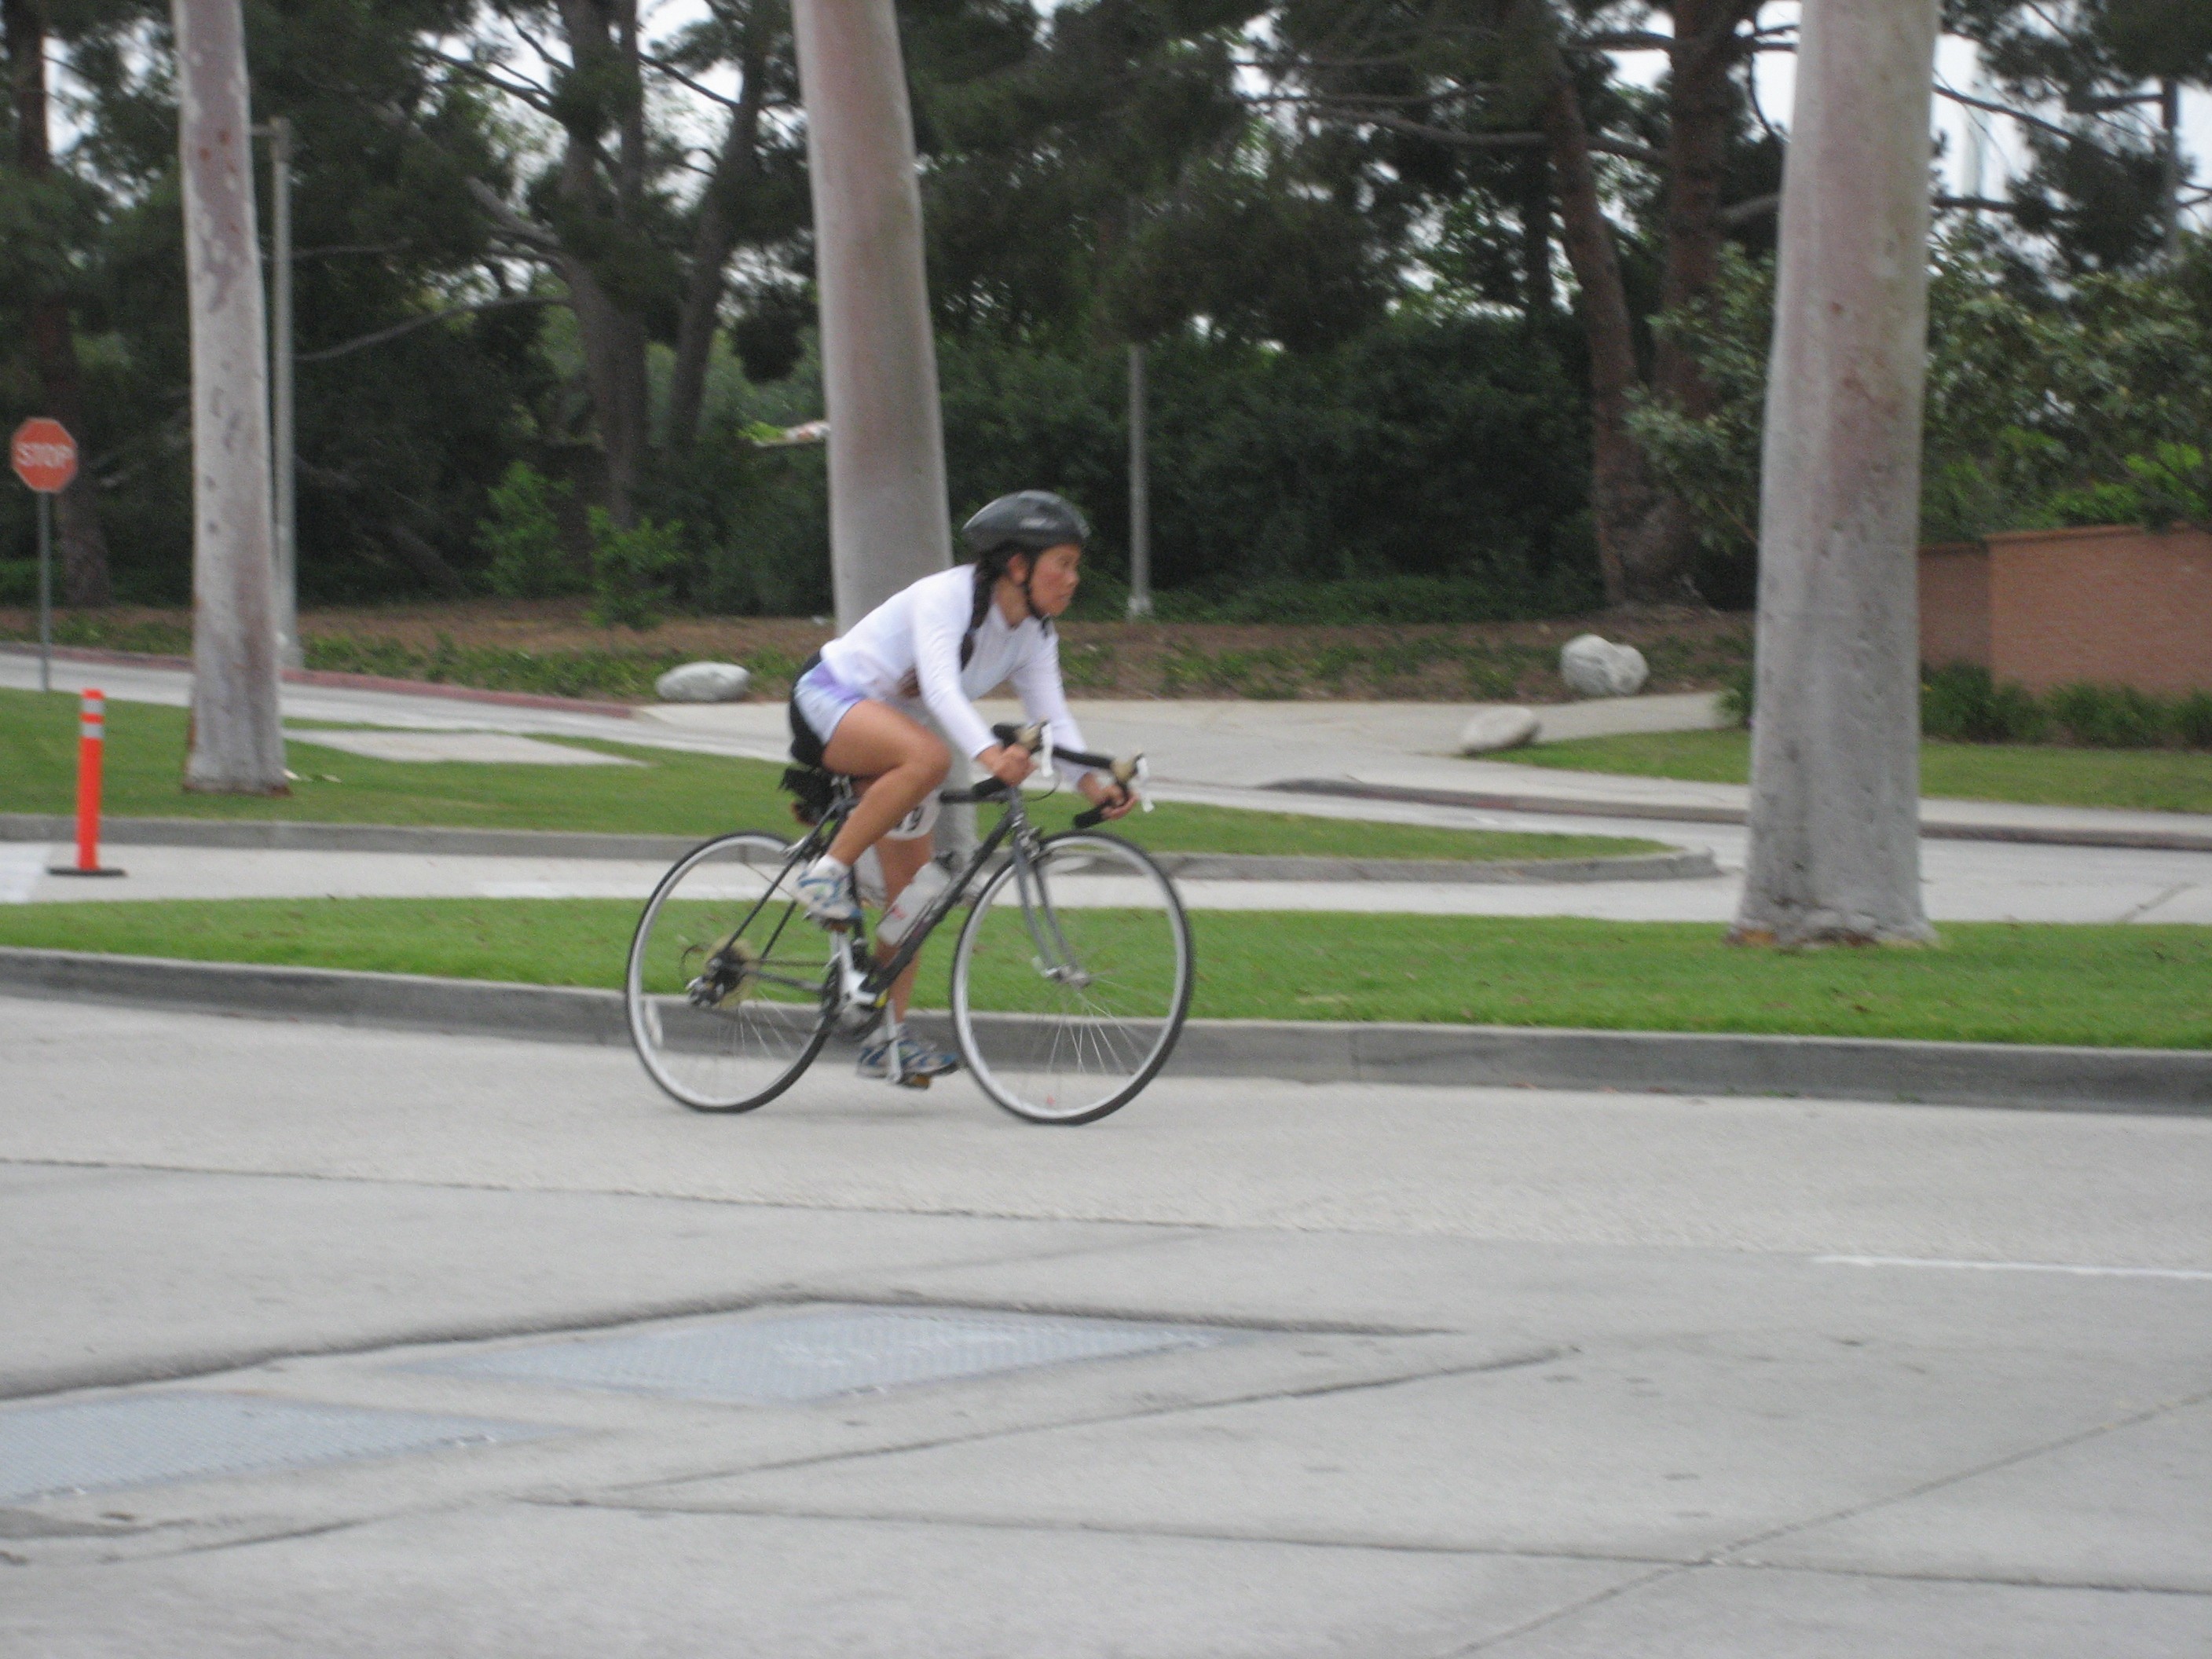 Cathy bicycling at CSULB Reverse Triathlon